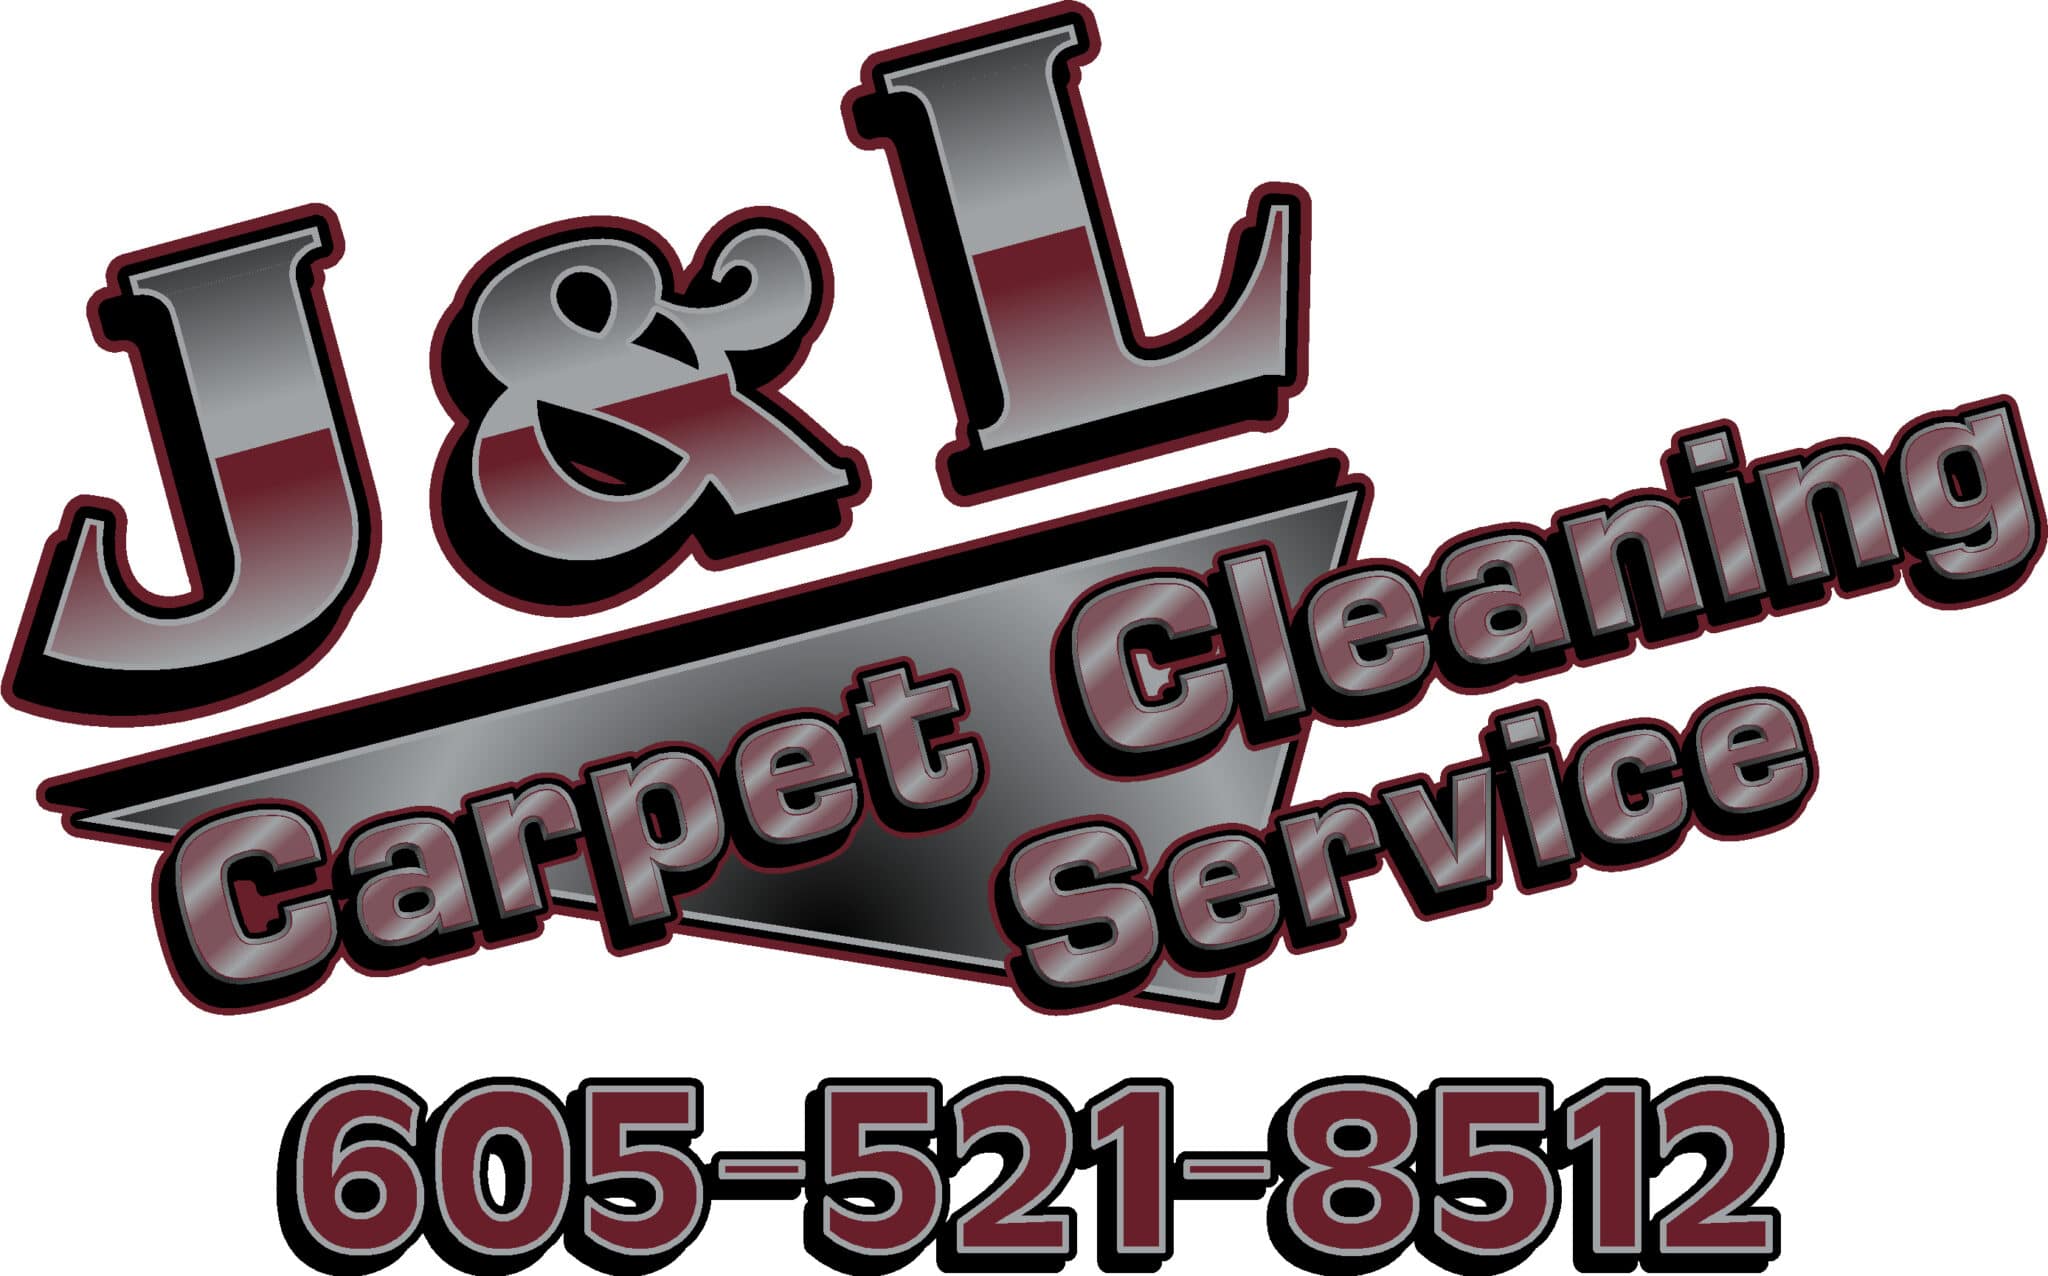 J&L Carpet Cleaning Service